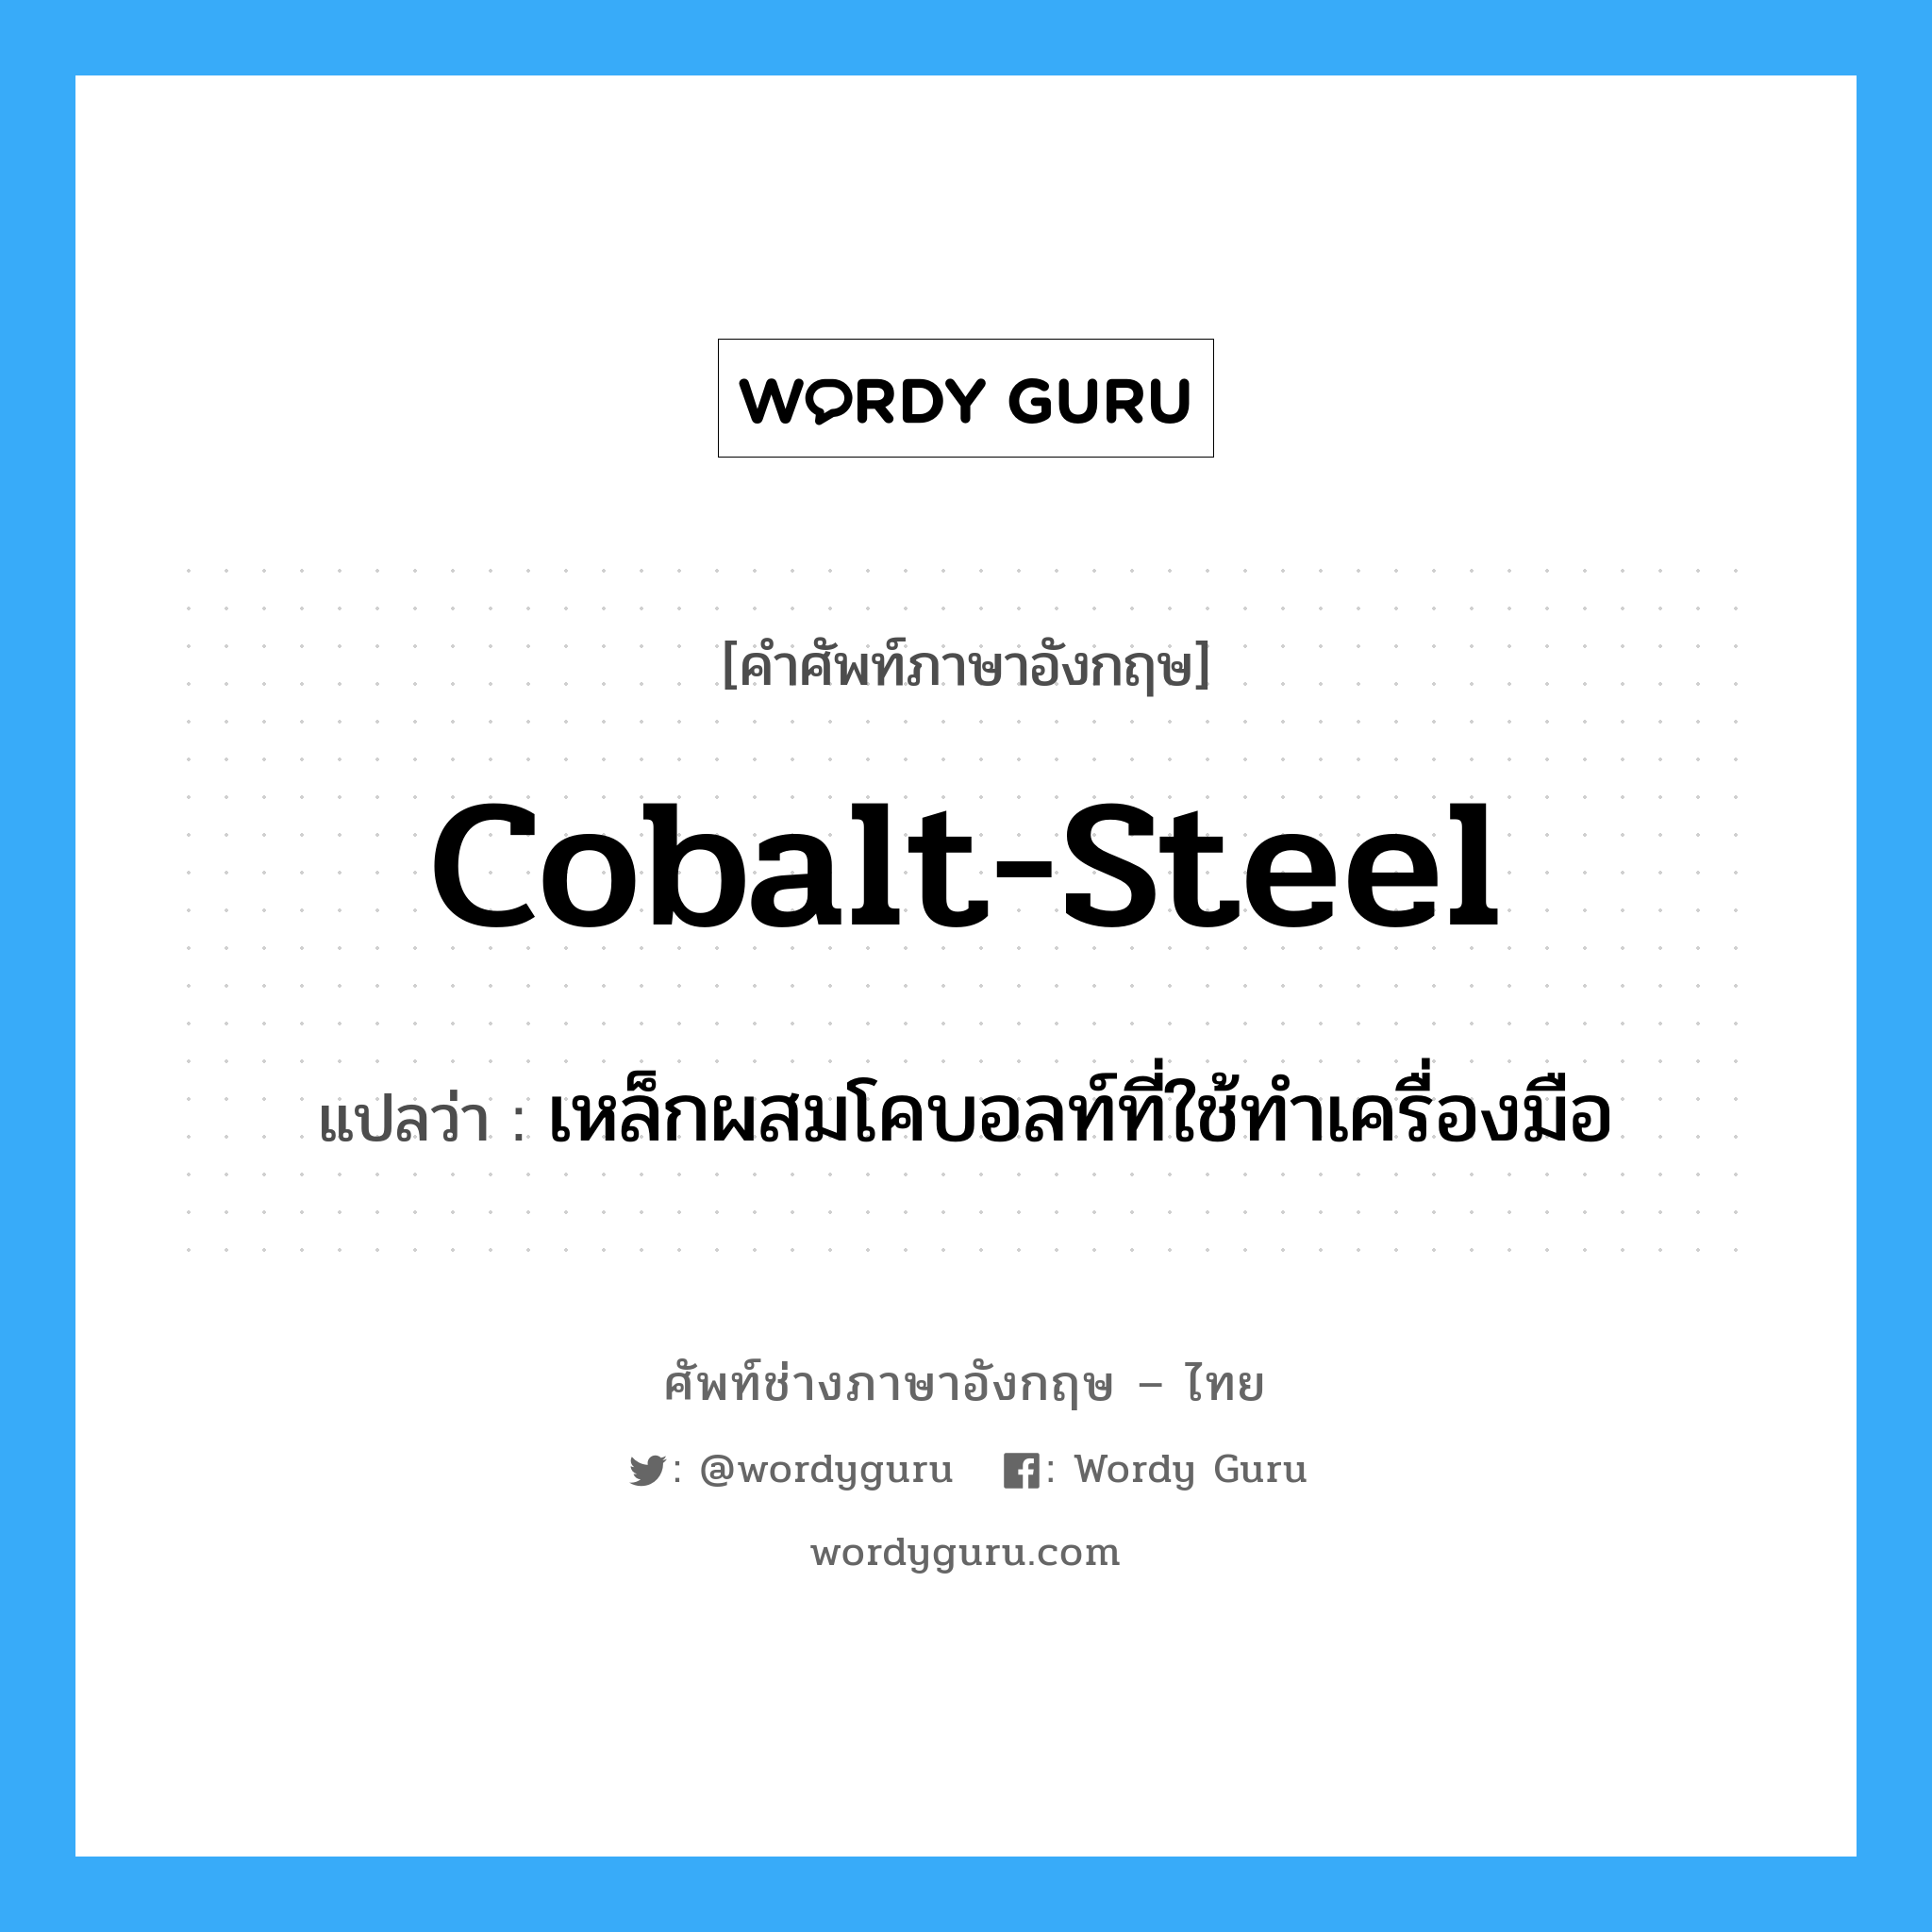 cobalt-steel แปลว่า?, คำศัพท์ช่างภาษาอังกฤษ - ไทย cobalt-steel คำศัพท์ภาษาอังกฤษ cobalt-steel แปลว่า เหล็กผสมโคบอลท์ที่ใช้ทำเครื่องมือ